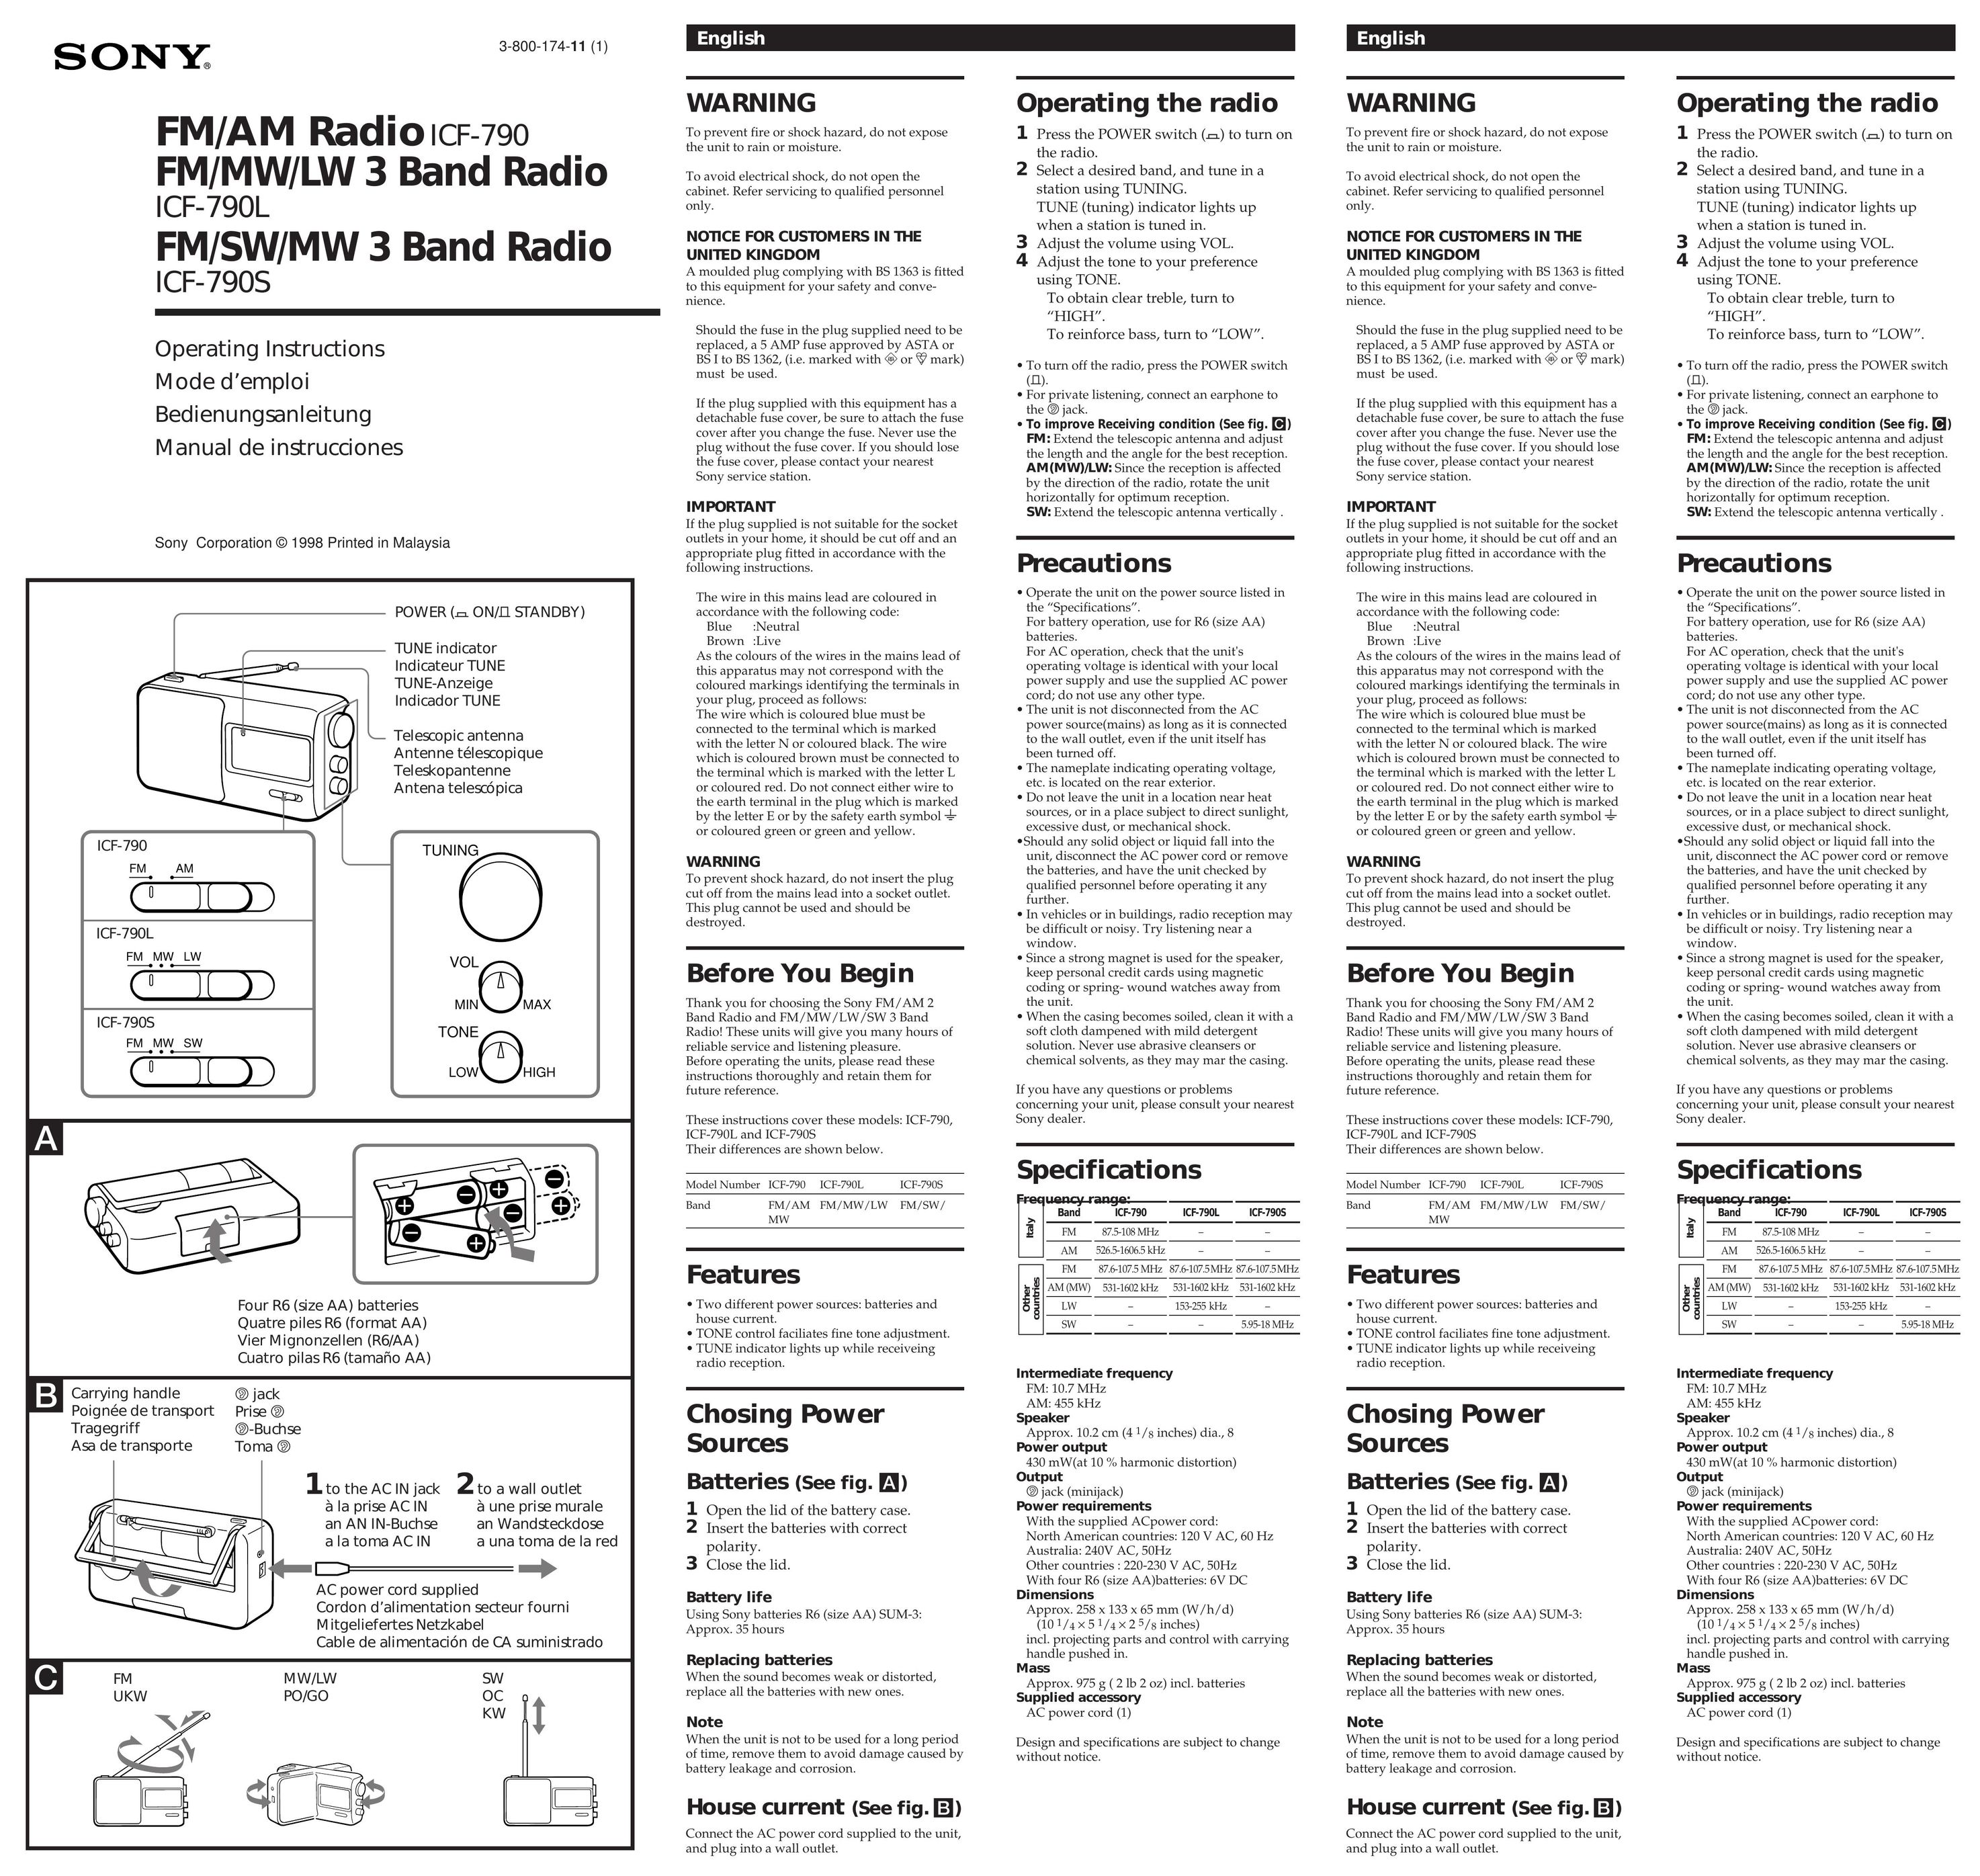 Sony ICF-790L Radio User Manual